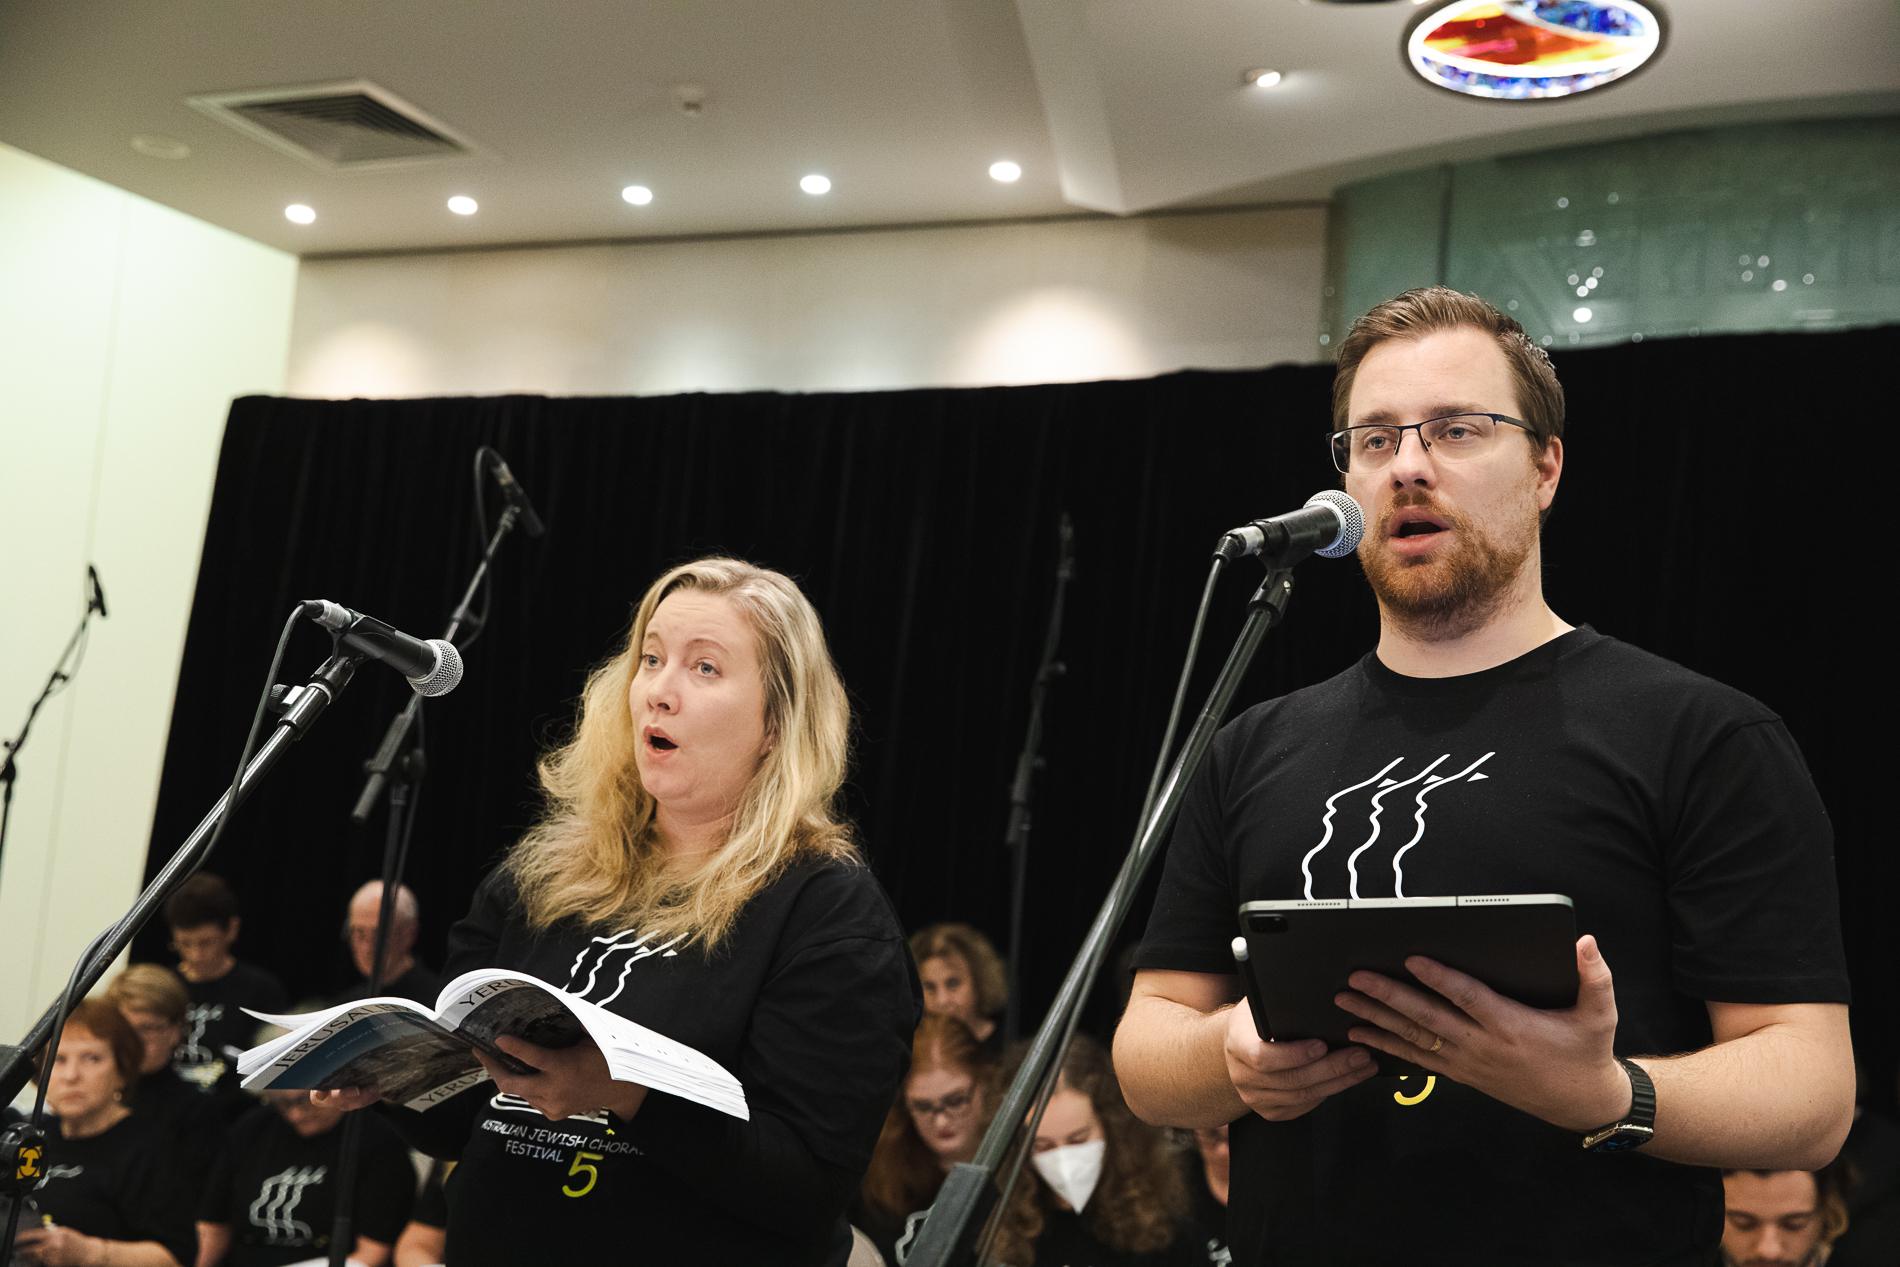 Jerusalem-Yerushalayim – 2022 Australian Jewish Choral Festival